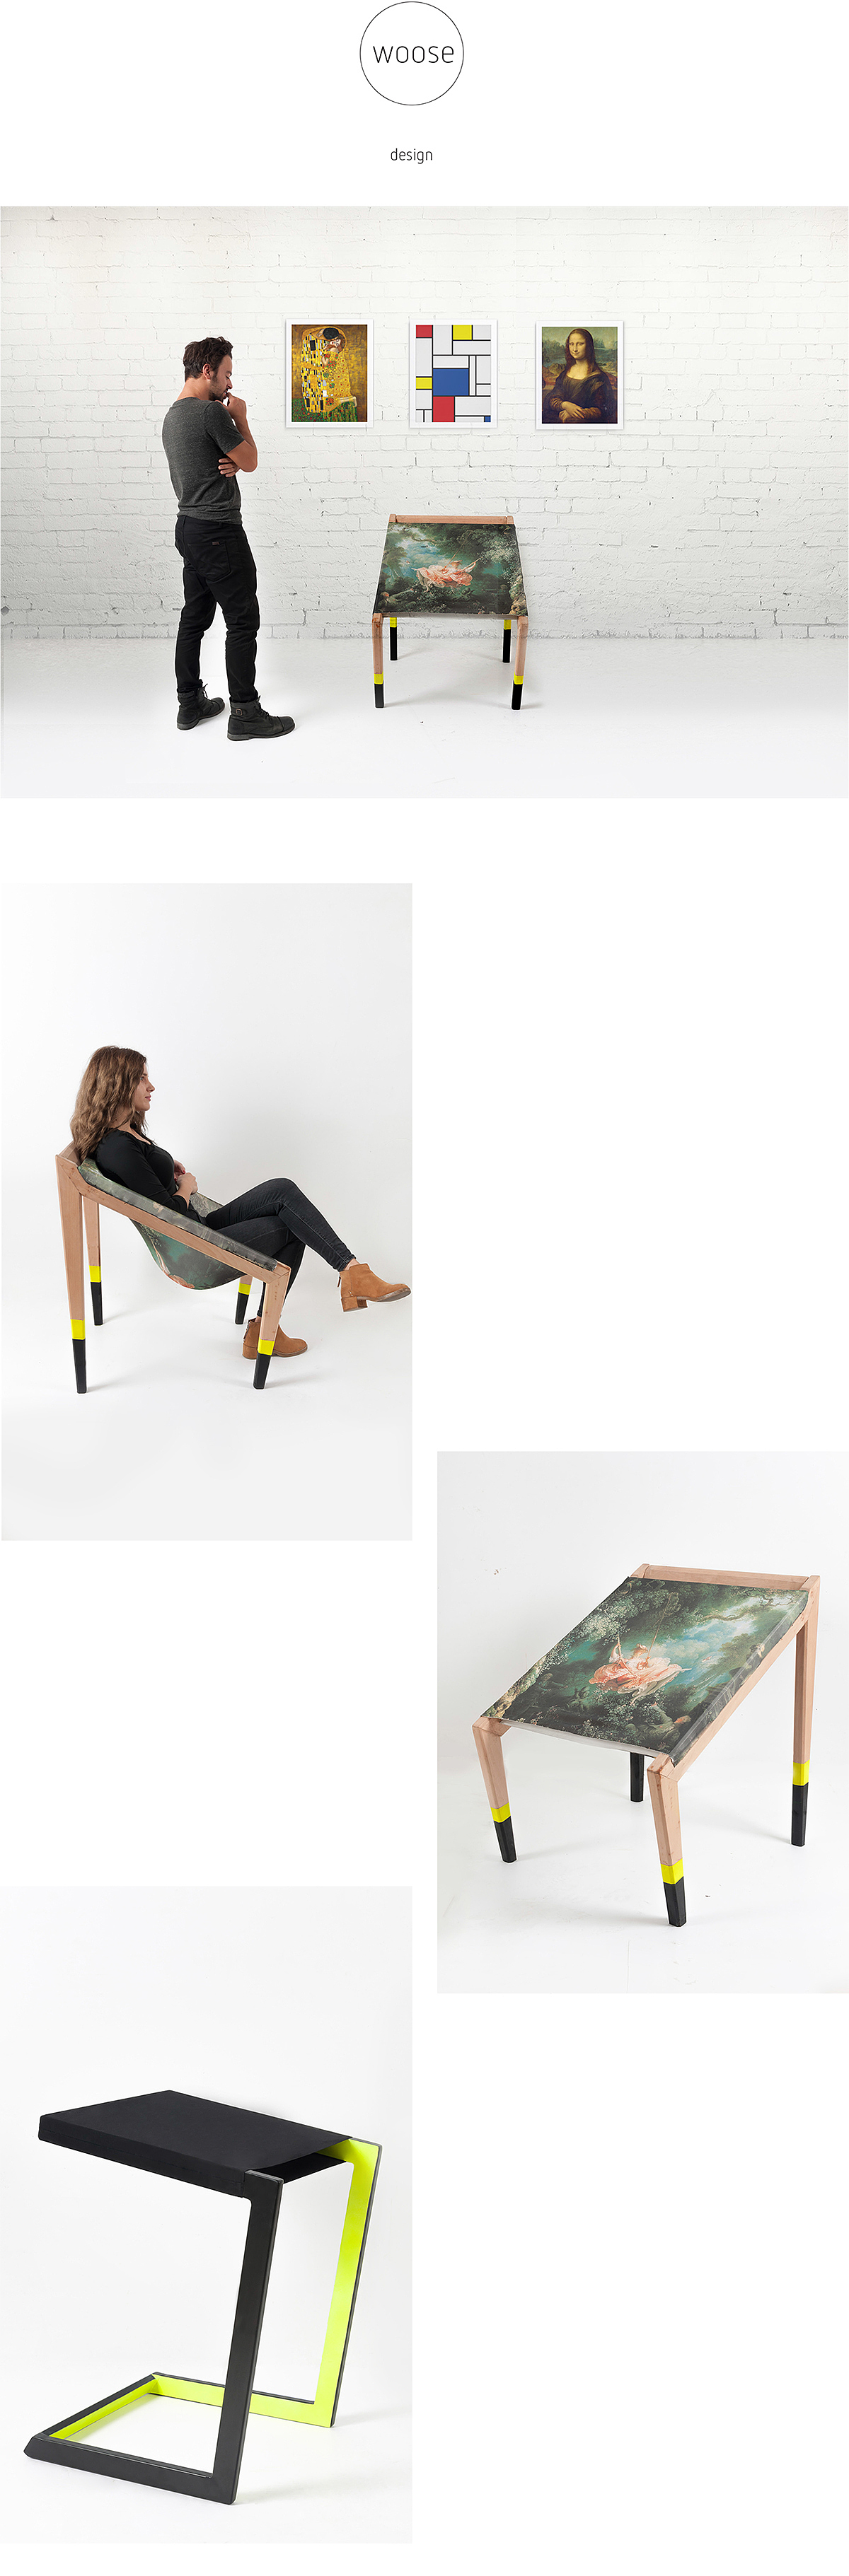 woose design，椅子，纺织品，金属，